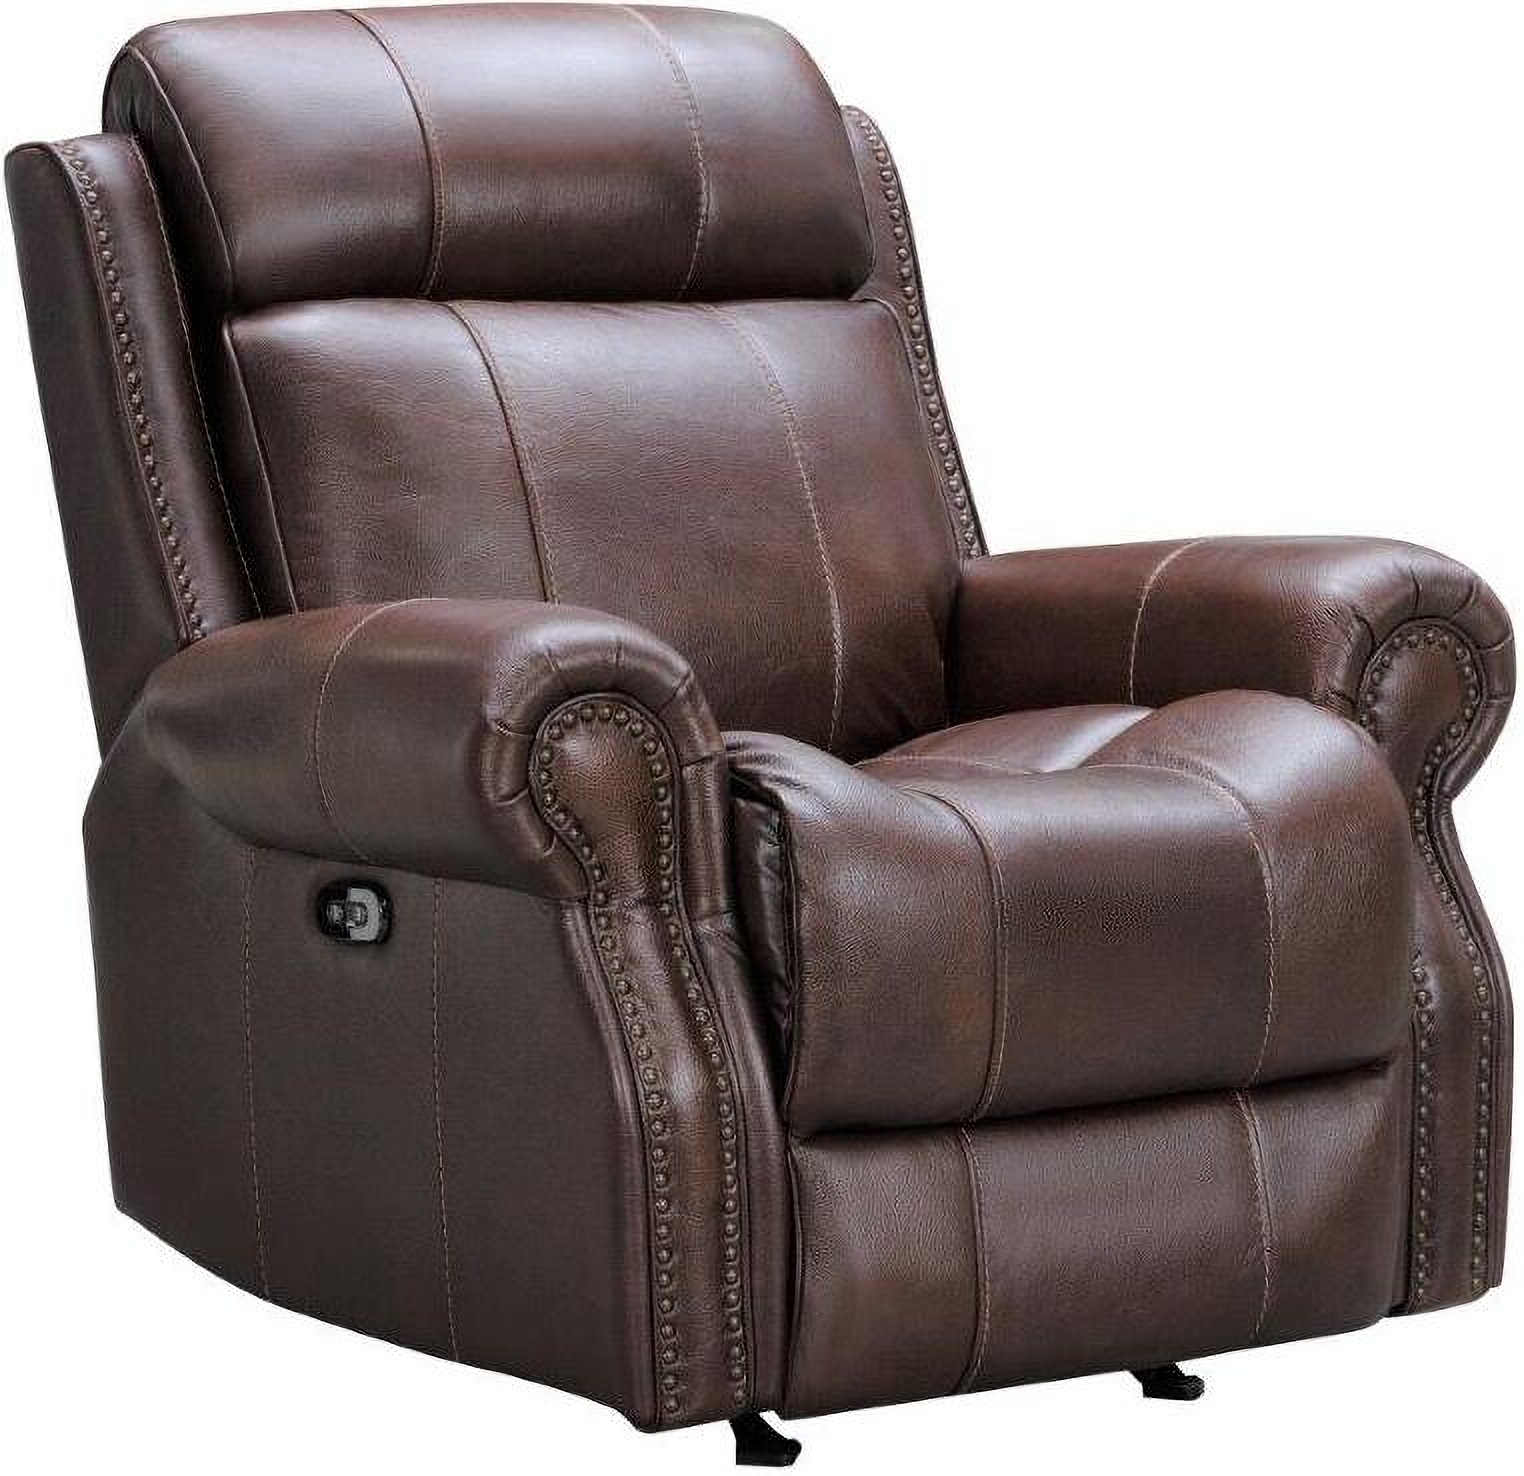 https://cdn.1stopbedrooms.com/media/i/raw/catalog/product/d/e/demara-rocker-recliner-in-el-paso-walnut-leather_qb13239552.jpg